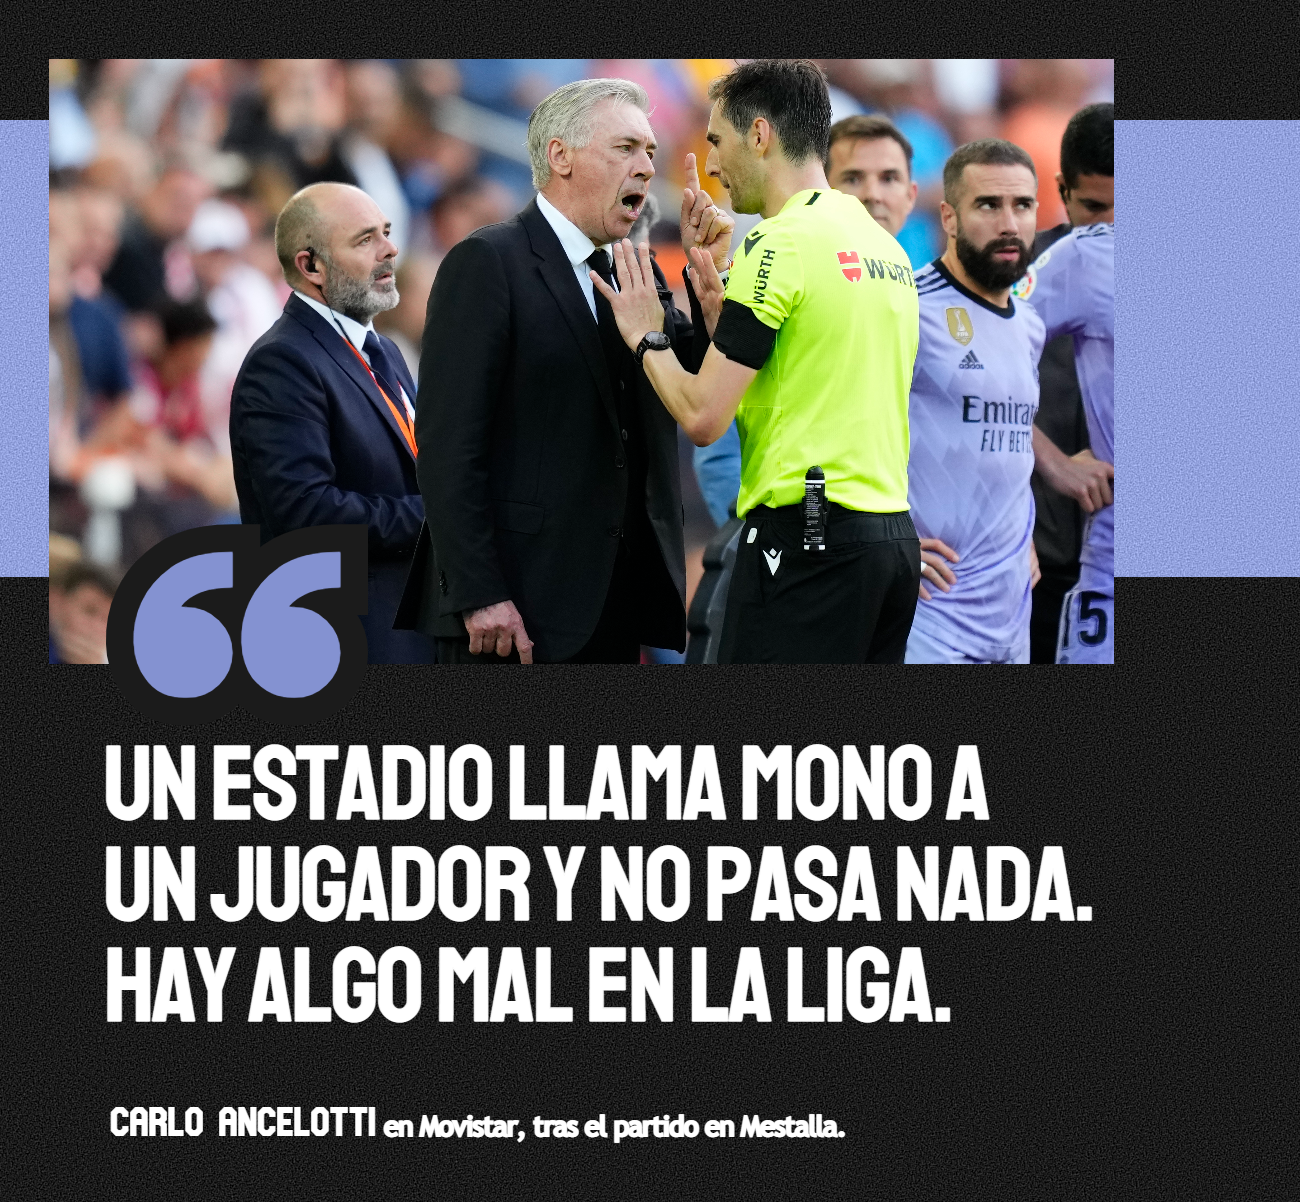 Madrid - Carlo Ancelotti